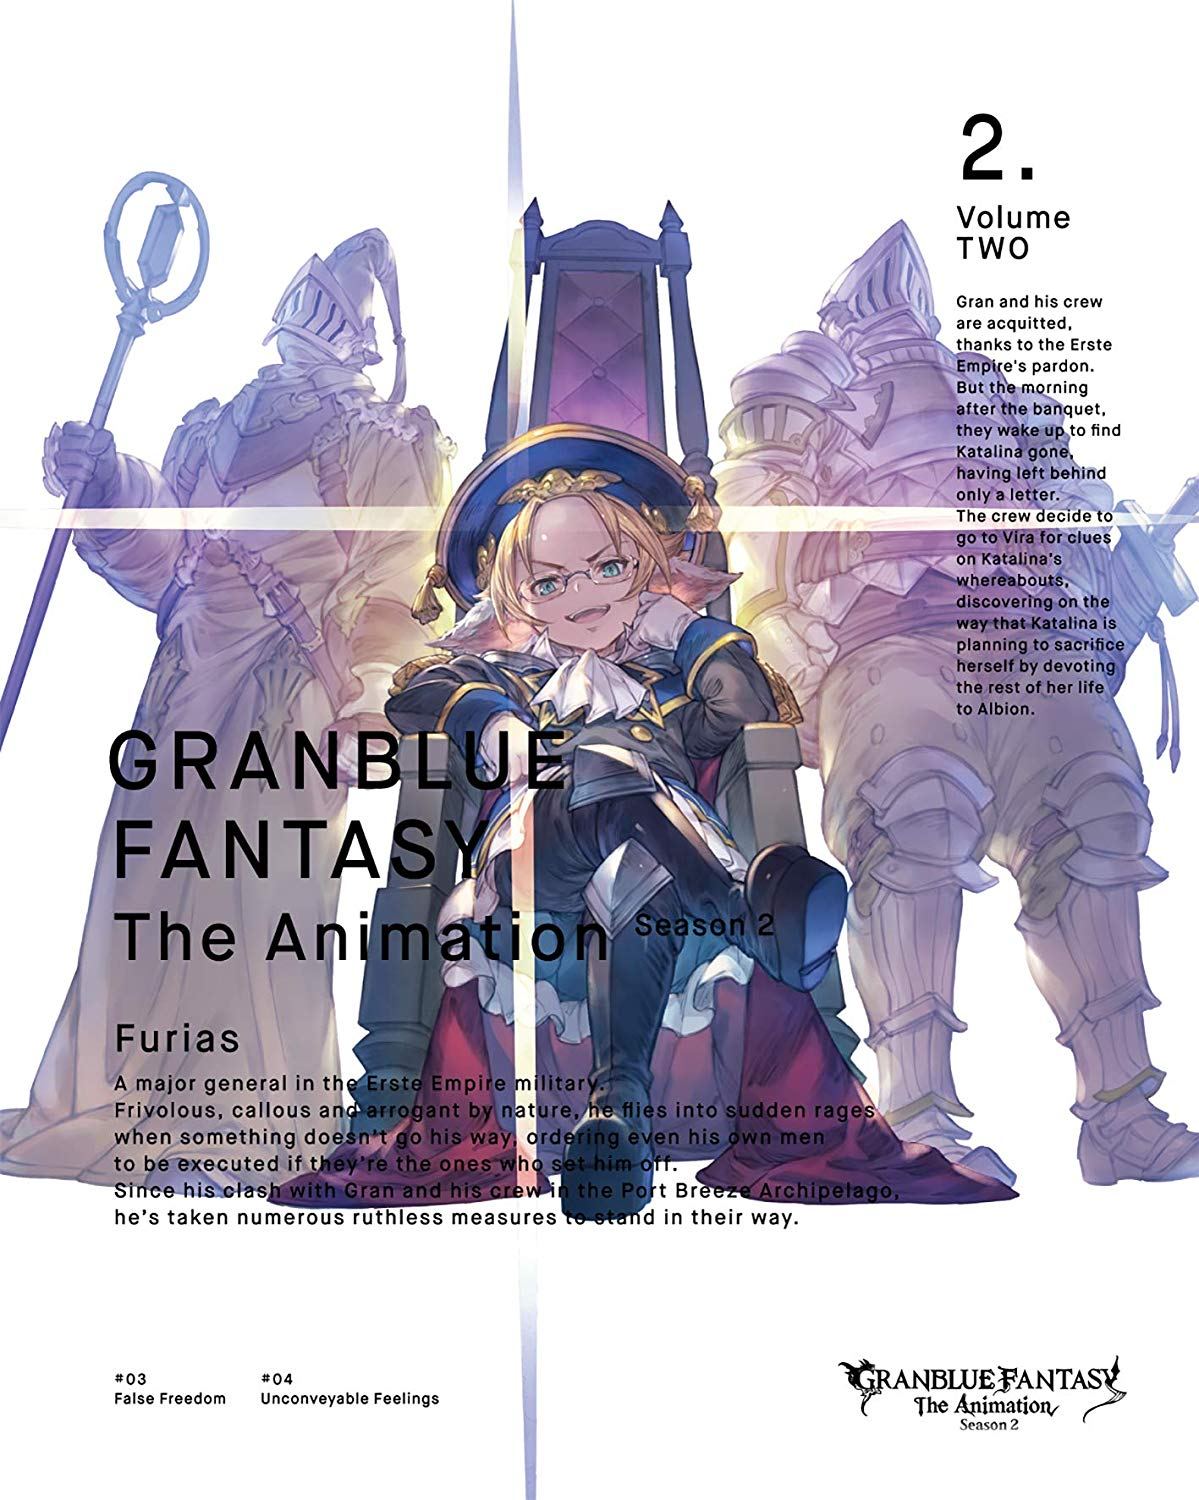 Granblue Fantasy The Animation Season 2 Vol.2 [Limited Edition 